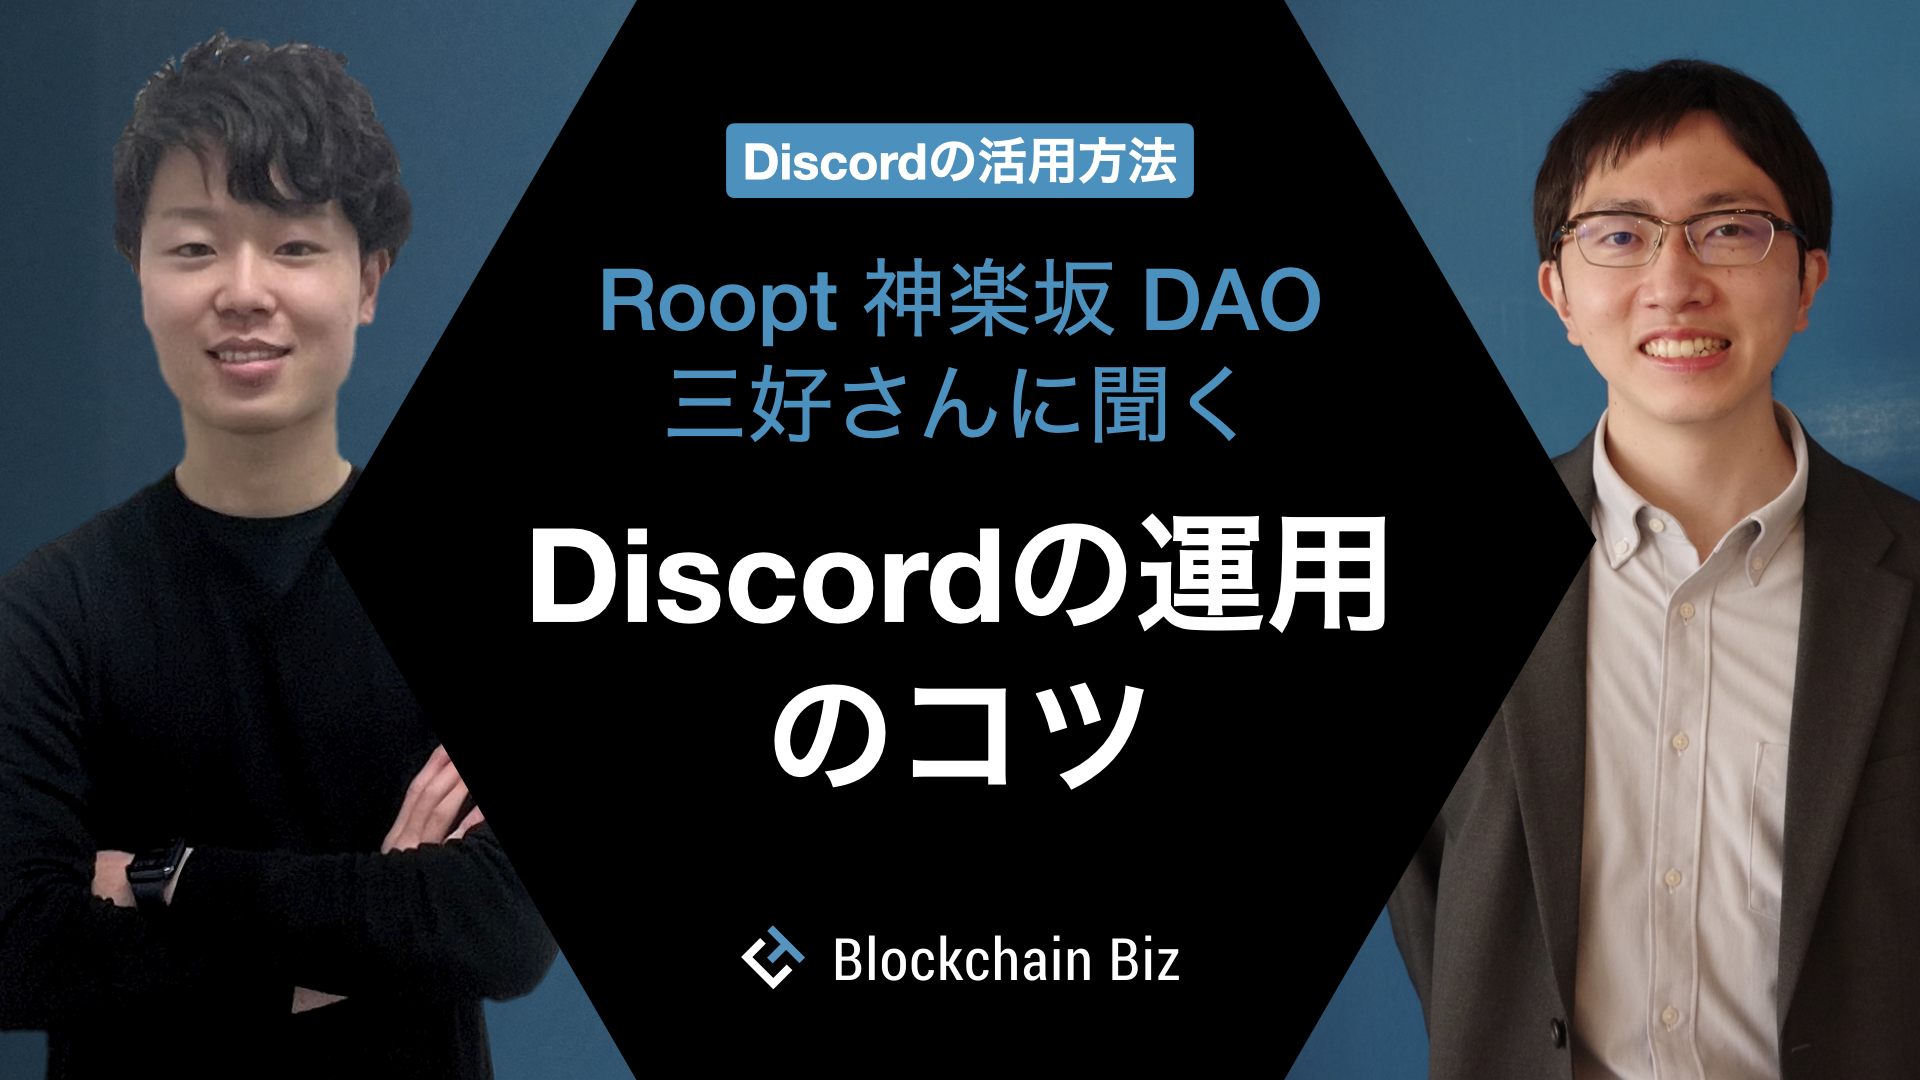 Discordの活用方法 Discordの運用のコツ – Roopt 神楽坂 DAO三好さんに聞く